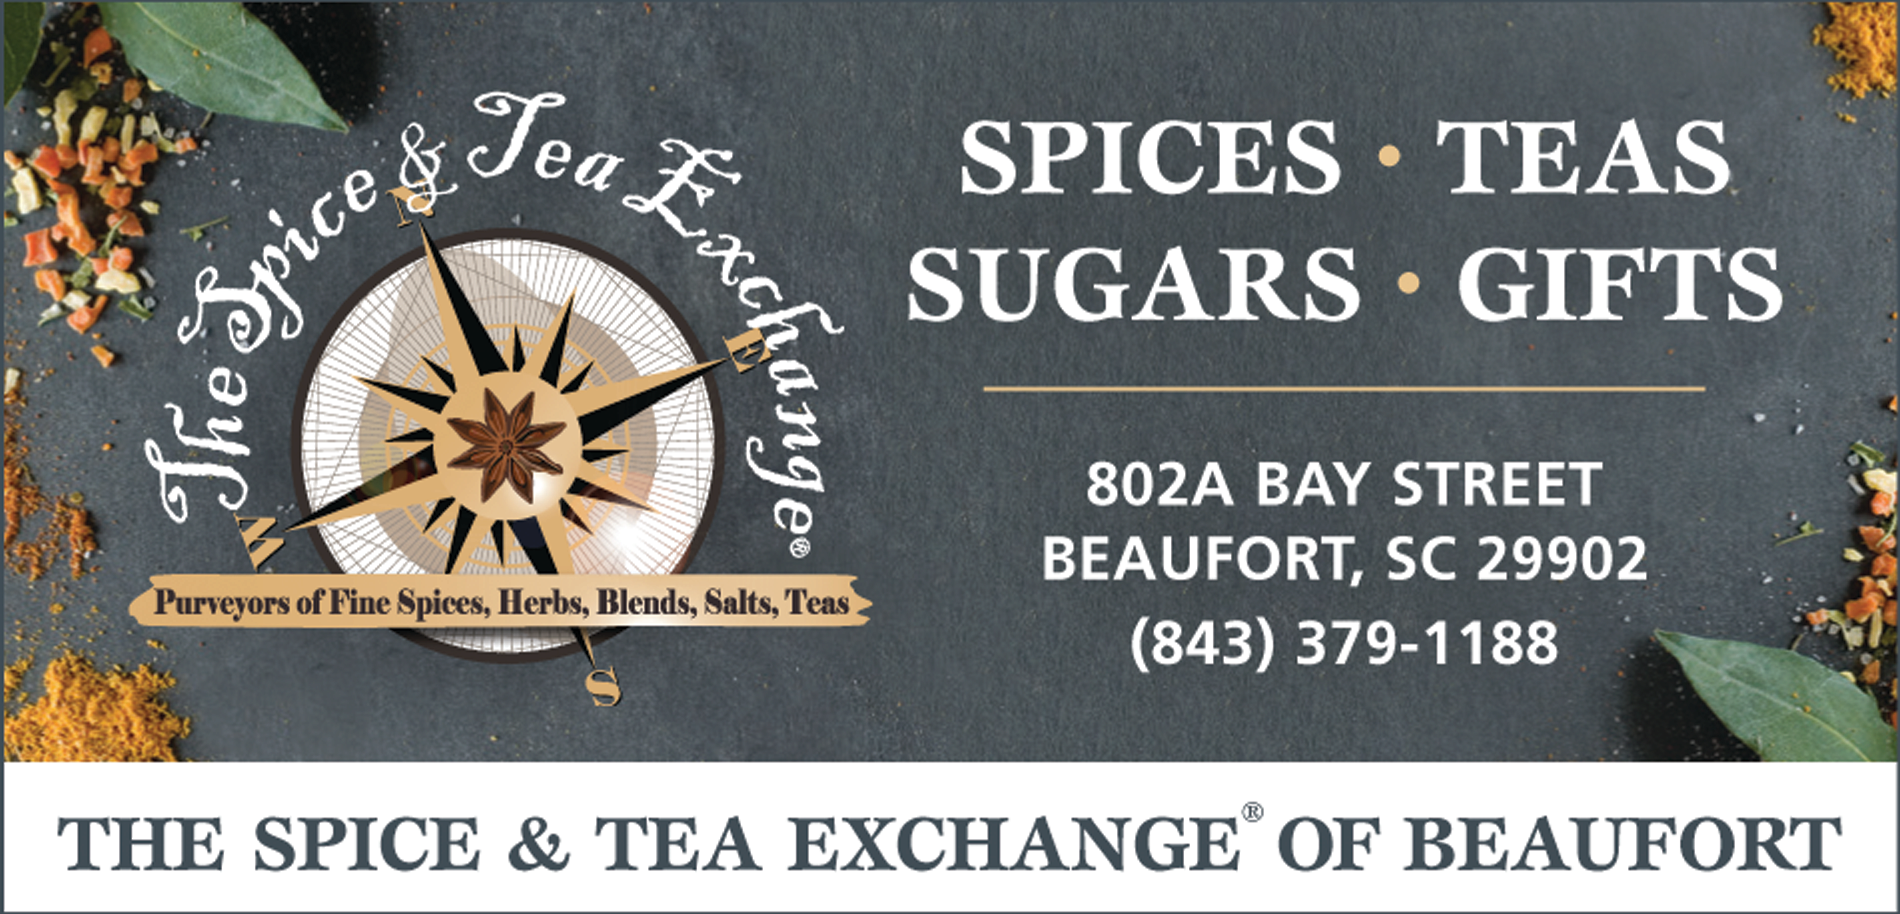 The Spice & Tea Exchange of Beaufort Print Ad